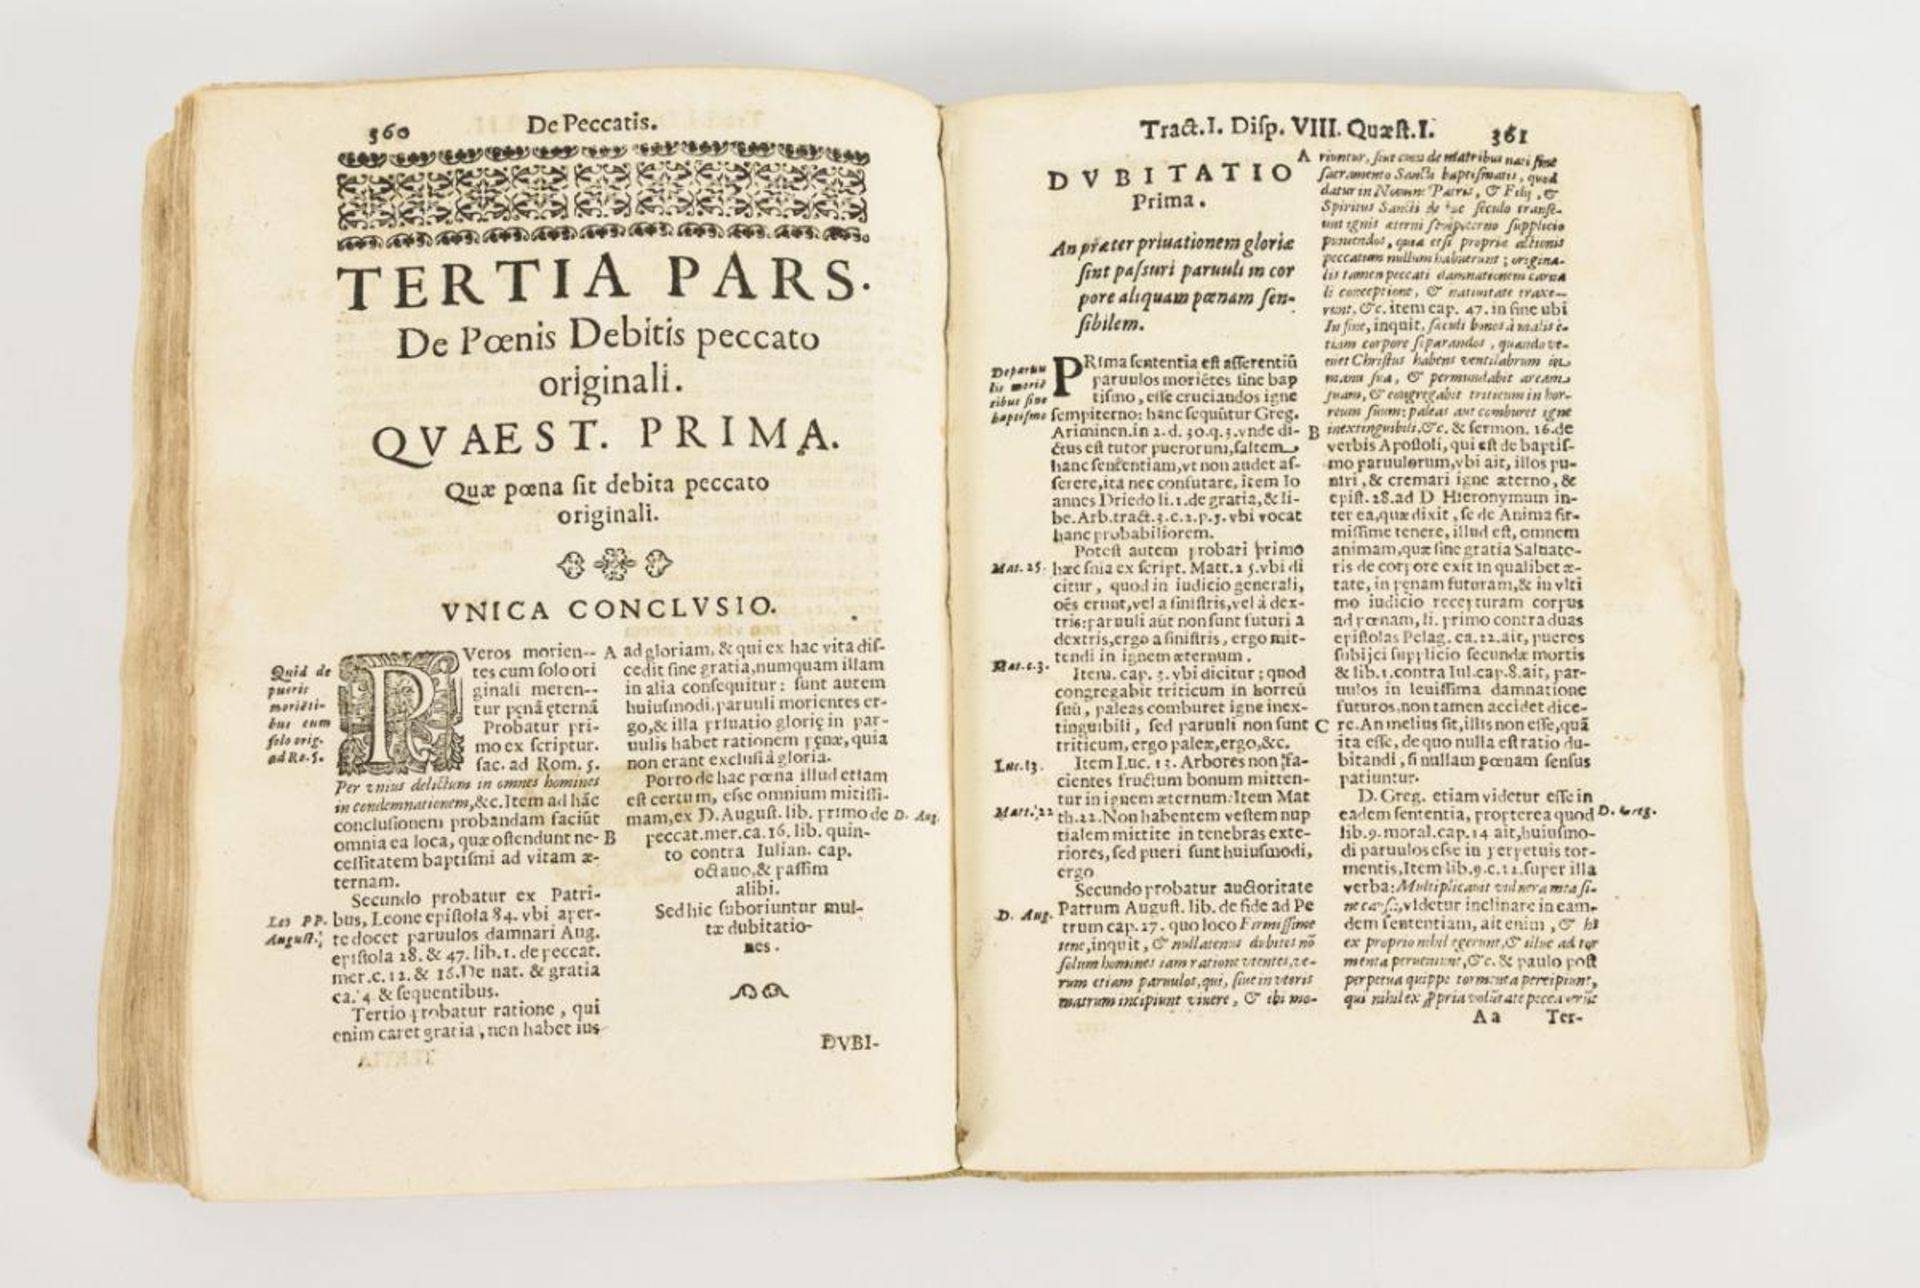 ROMANO, Hieronymo Onuphrio. "Tractatus de Integra sacramentali confessione absolutissimus". - Image 2 of 3